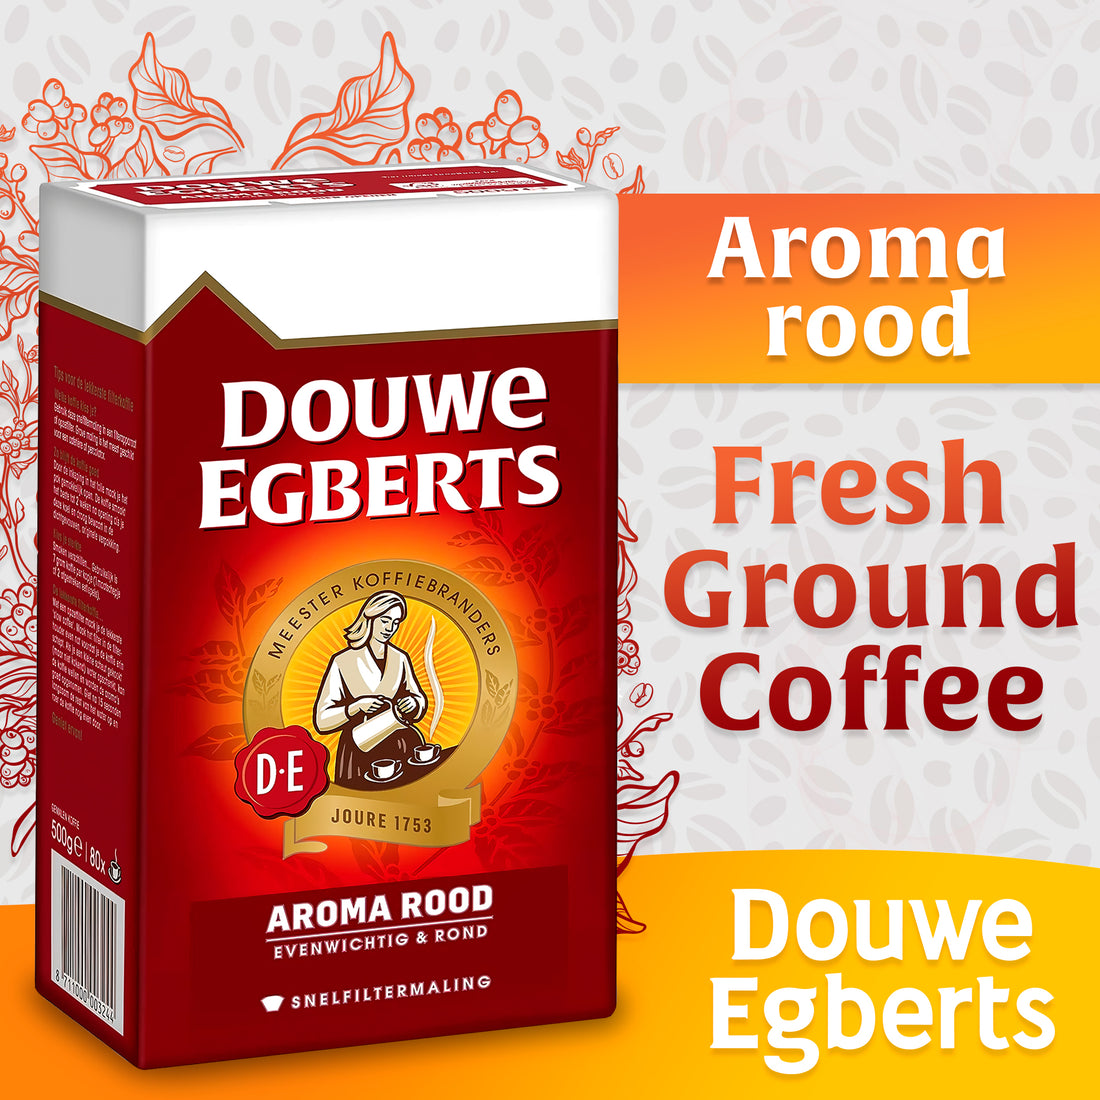 Douwe Egberts Aroma Rood Ground Coffee X 4 Packs, 4.4 Lb